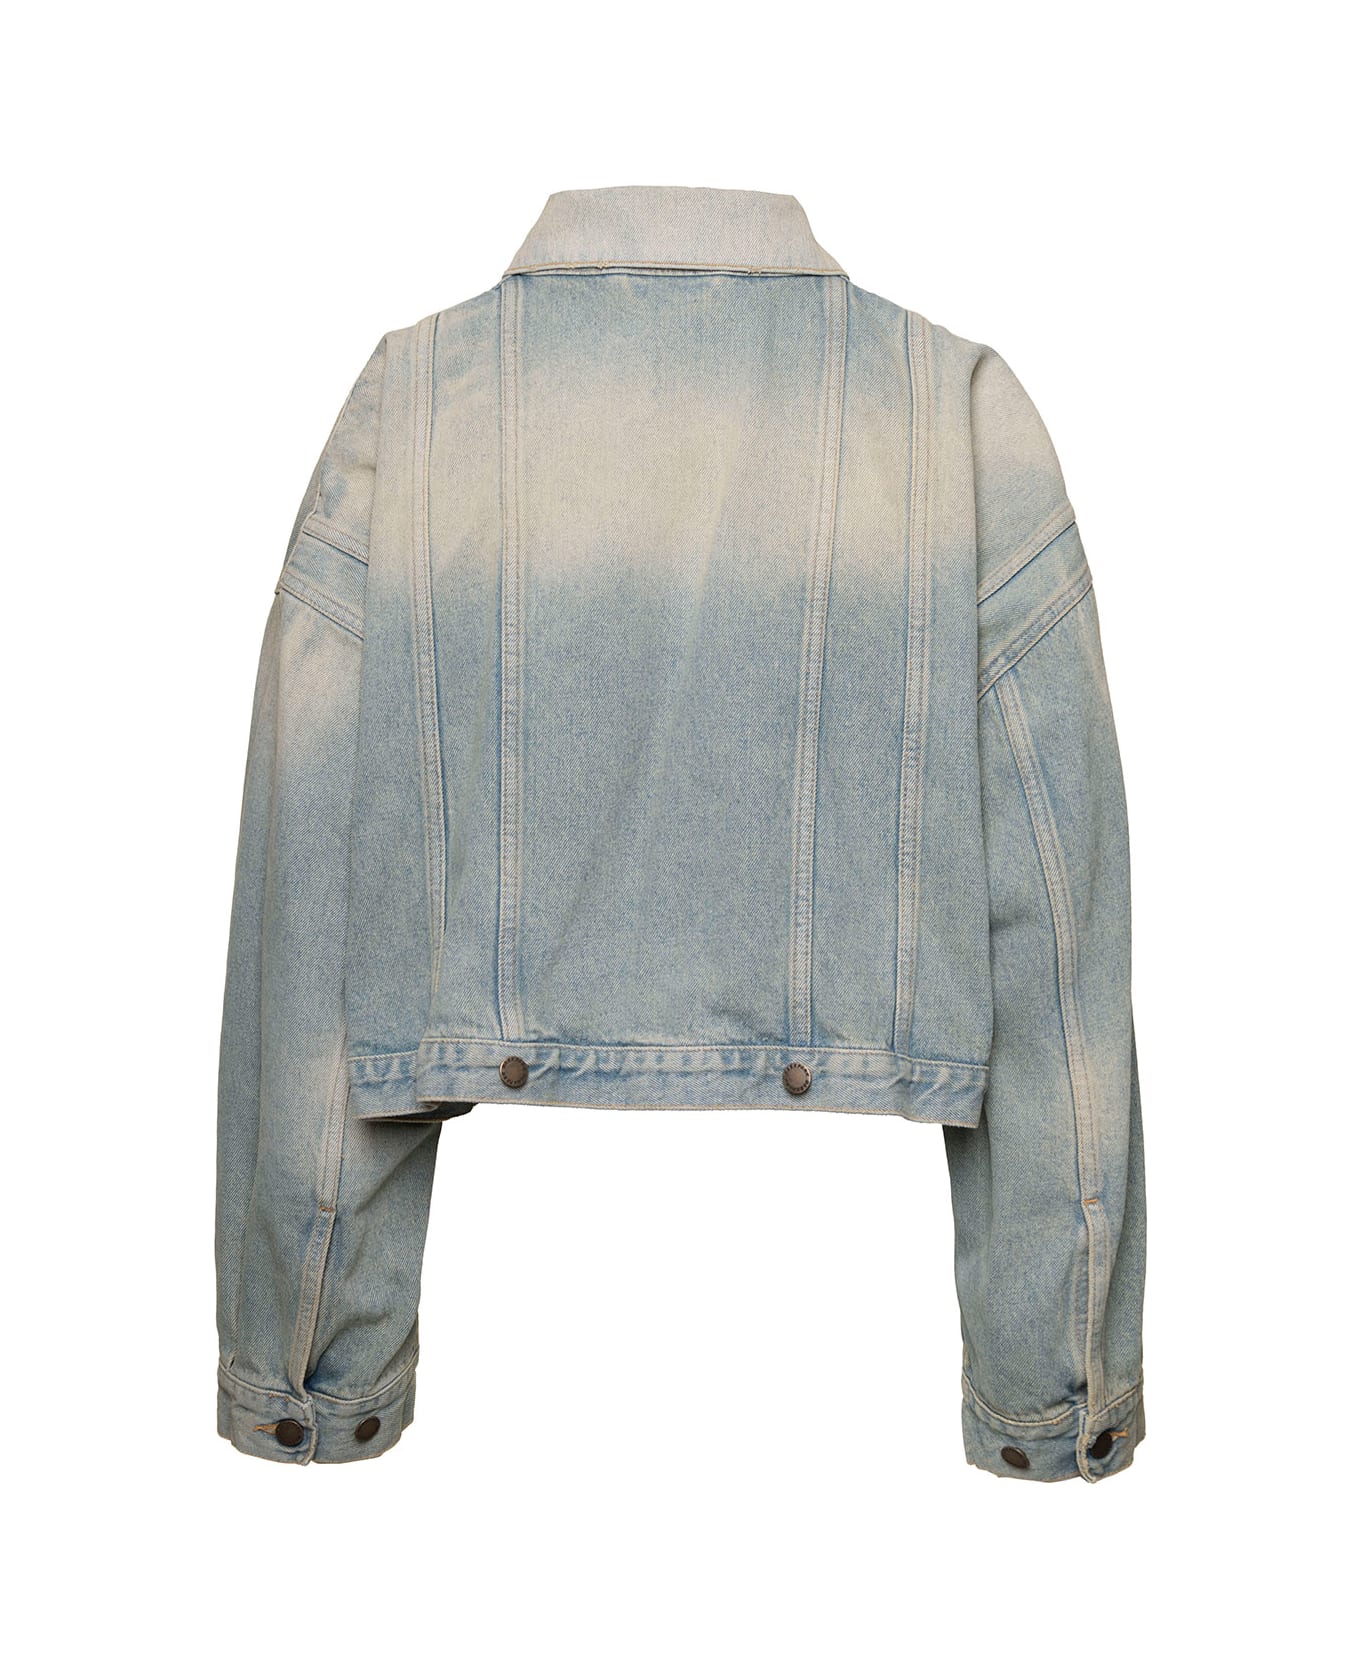 DARKPARK 'gigi' Light Blue Cropped Jacket With Bleach Effect In Cotton Denim Woman - Light blue ジャケット